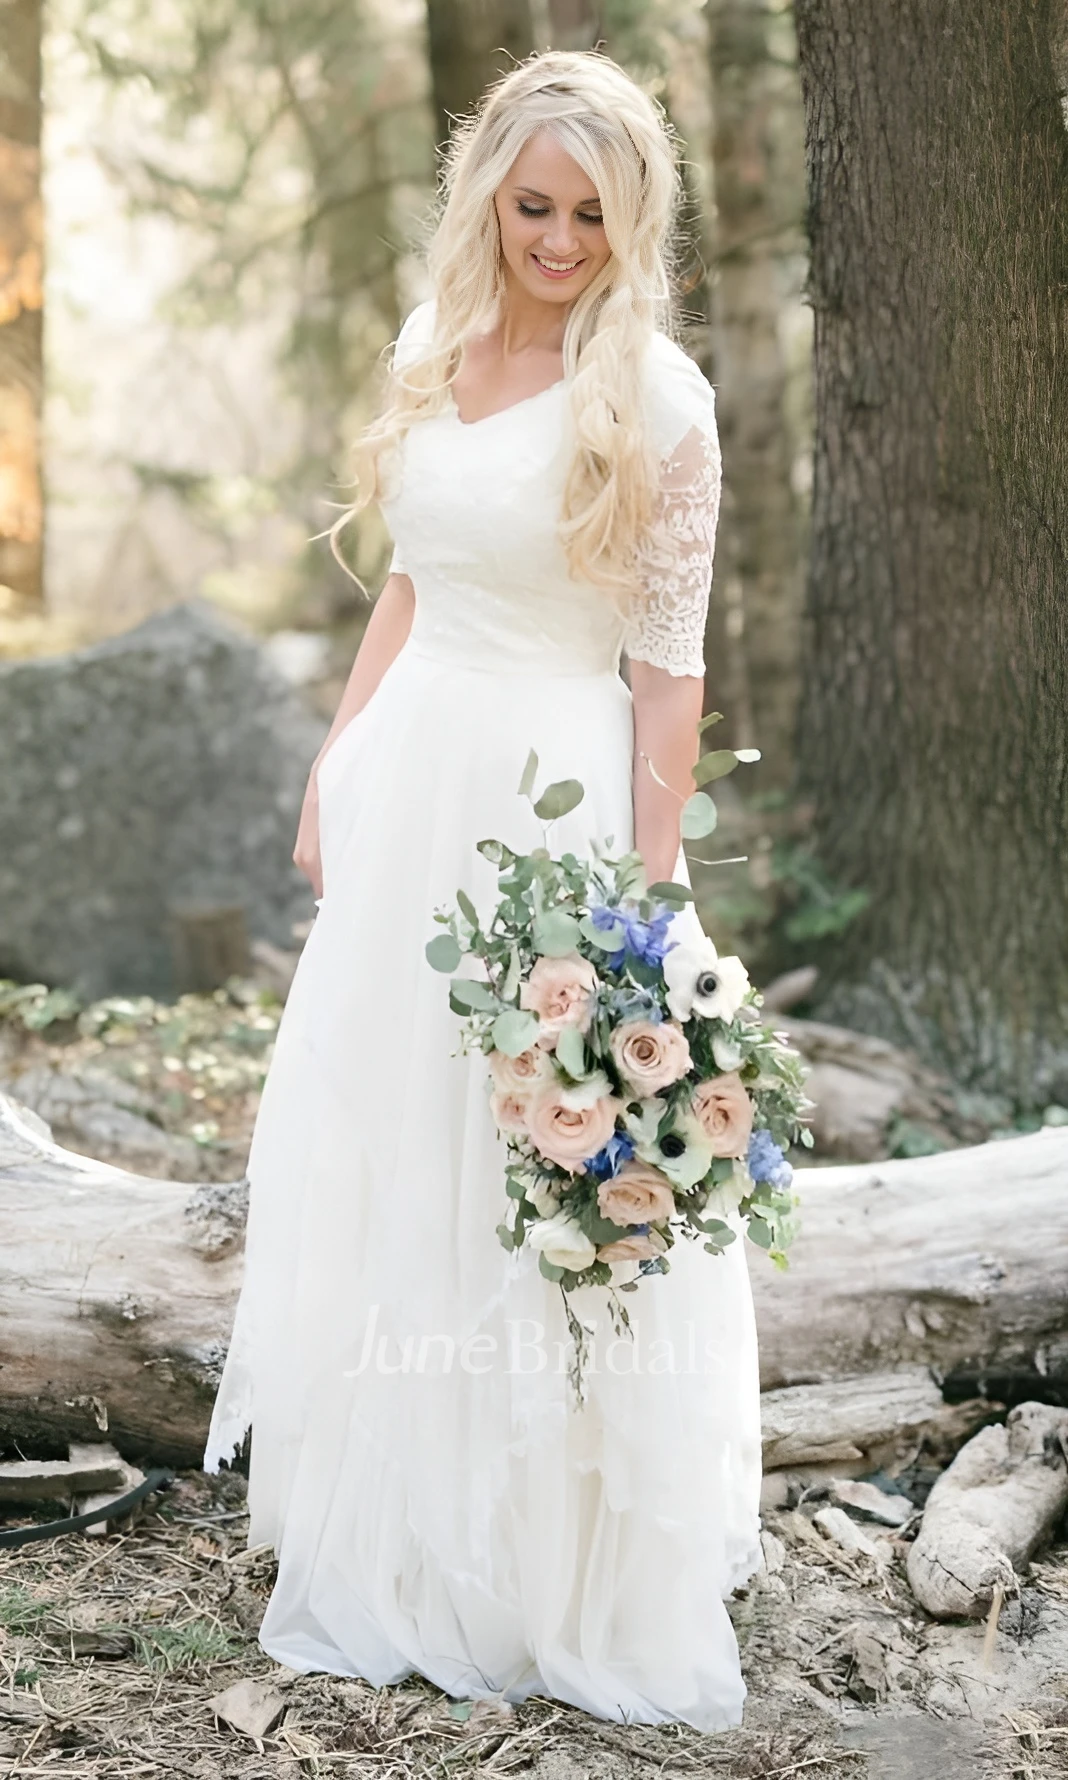 Ever-Pretty Elegant Cap Sleeves Casual Applique Outdoor Wedding Dress in Cream Size 26